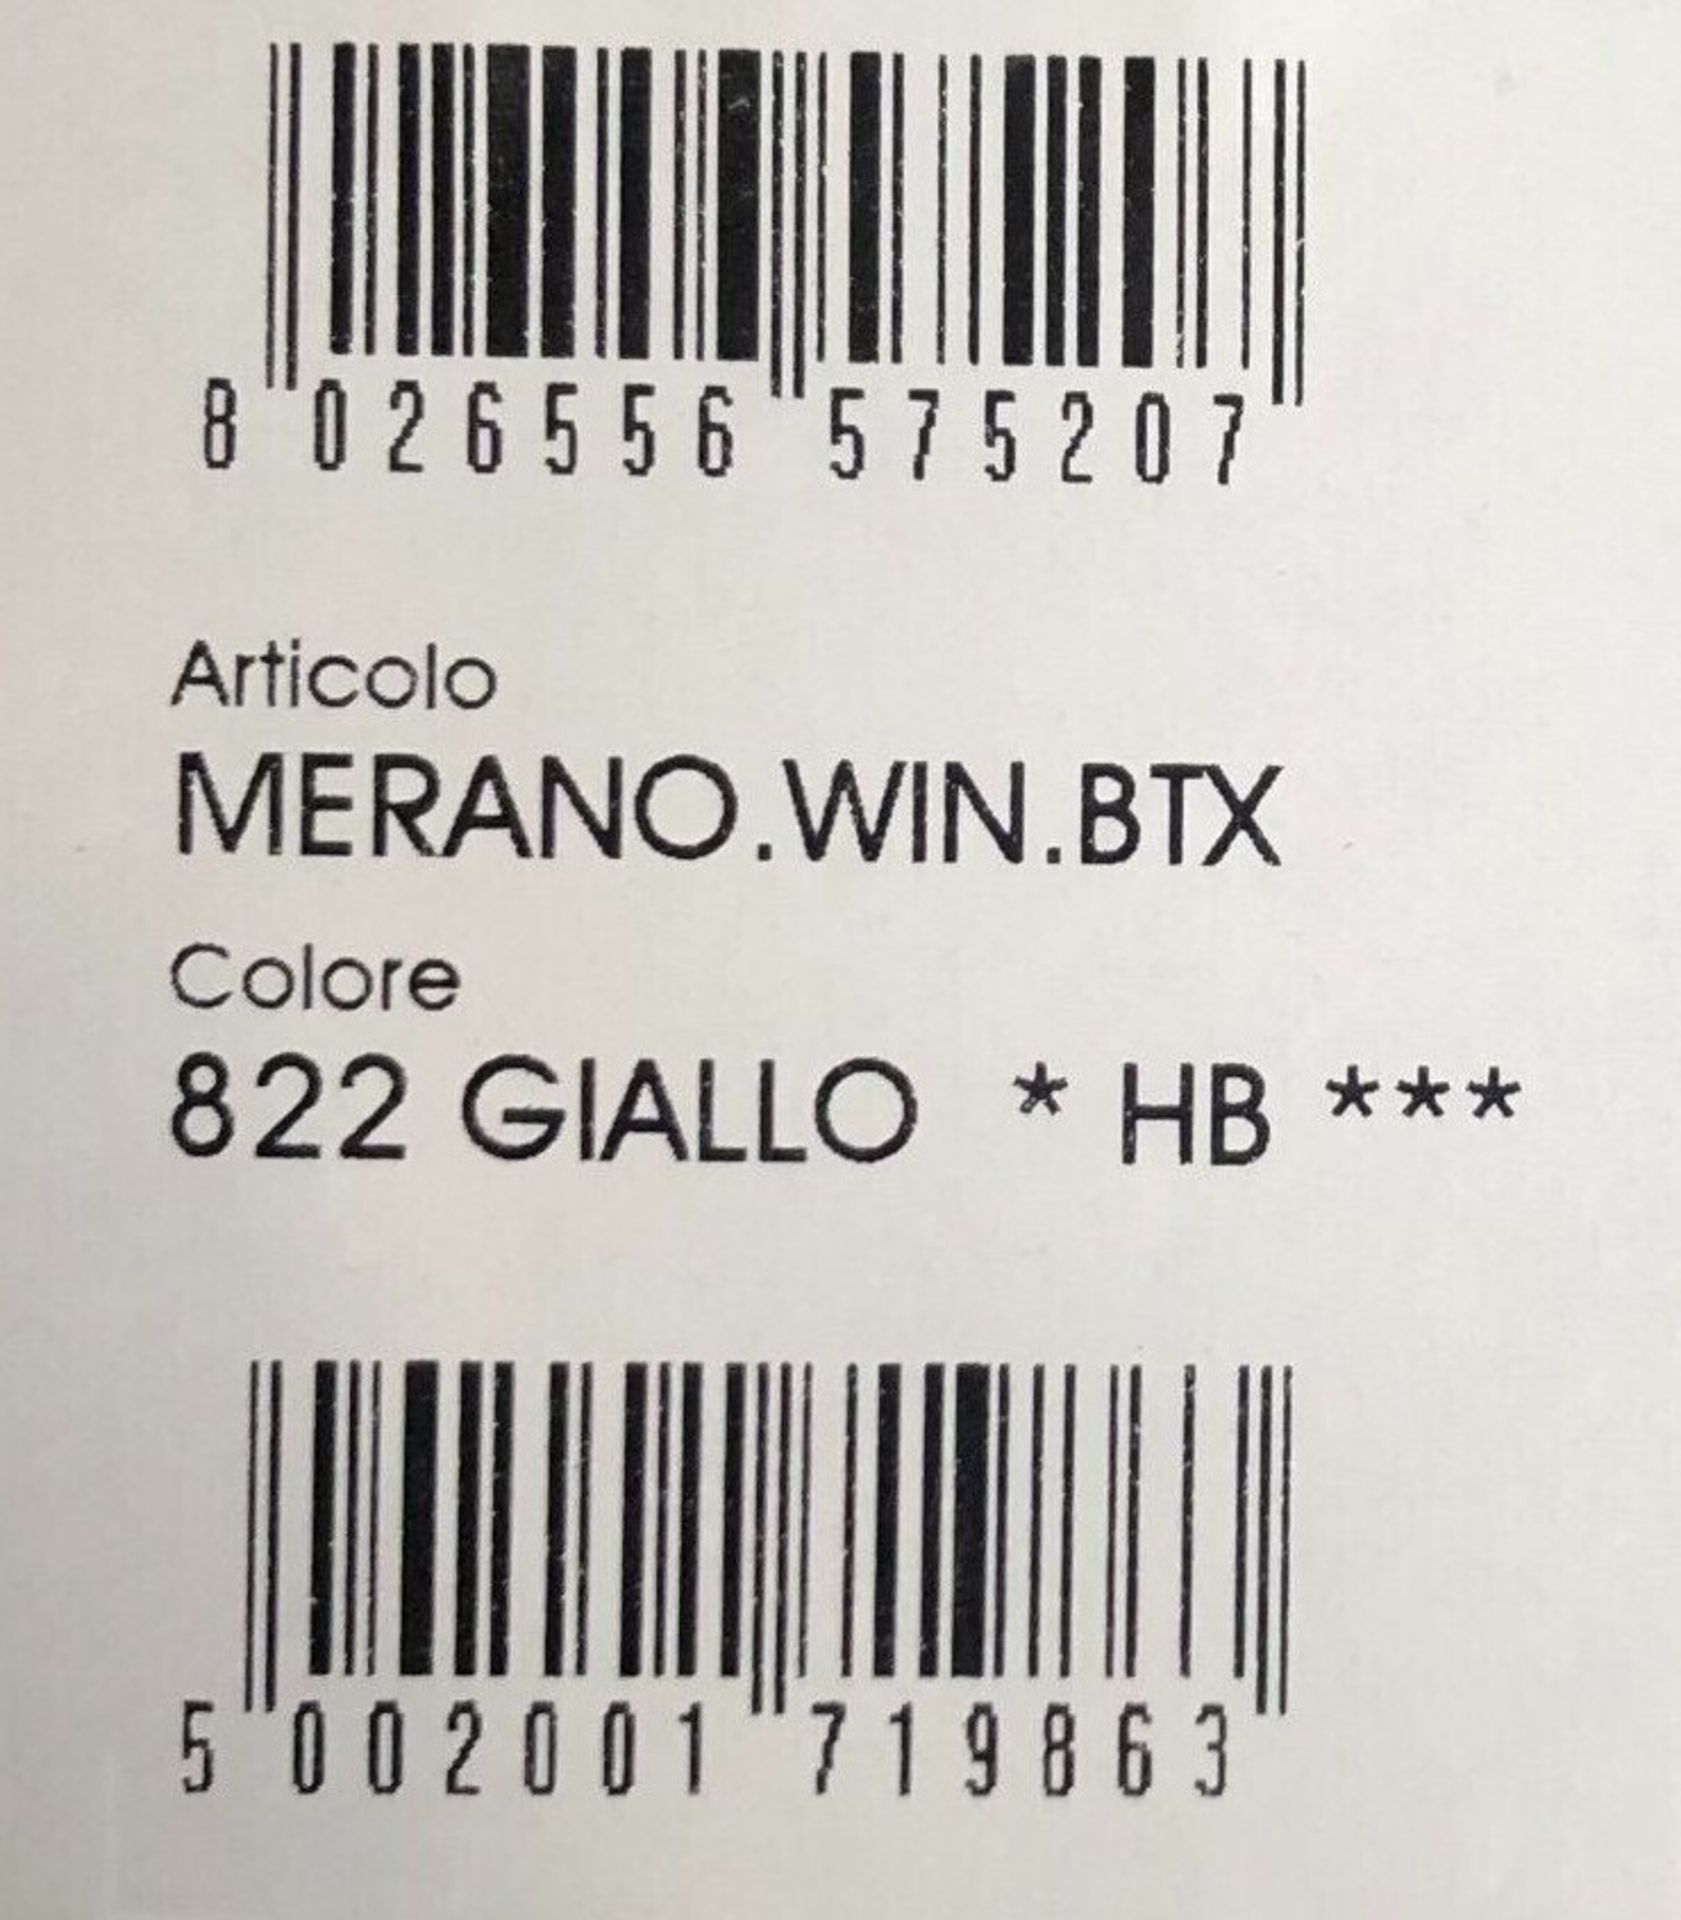 1 x Pair of Designer Olang Women's Winter Boots - Merano.Win.BTX 822 Giallo - Euro Size 38 - New - Image 2 of 7